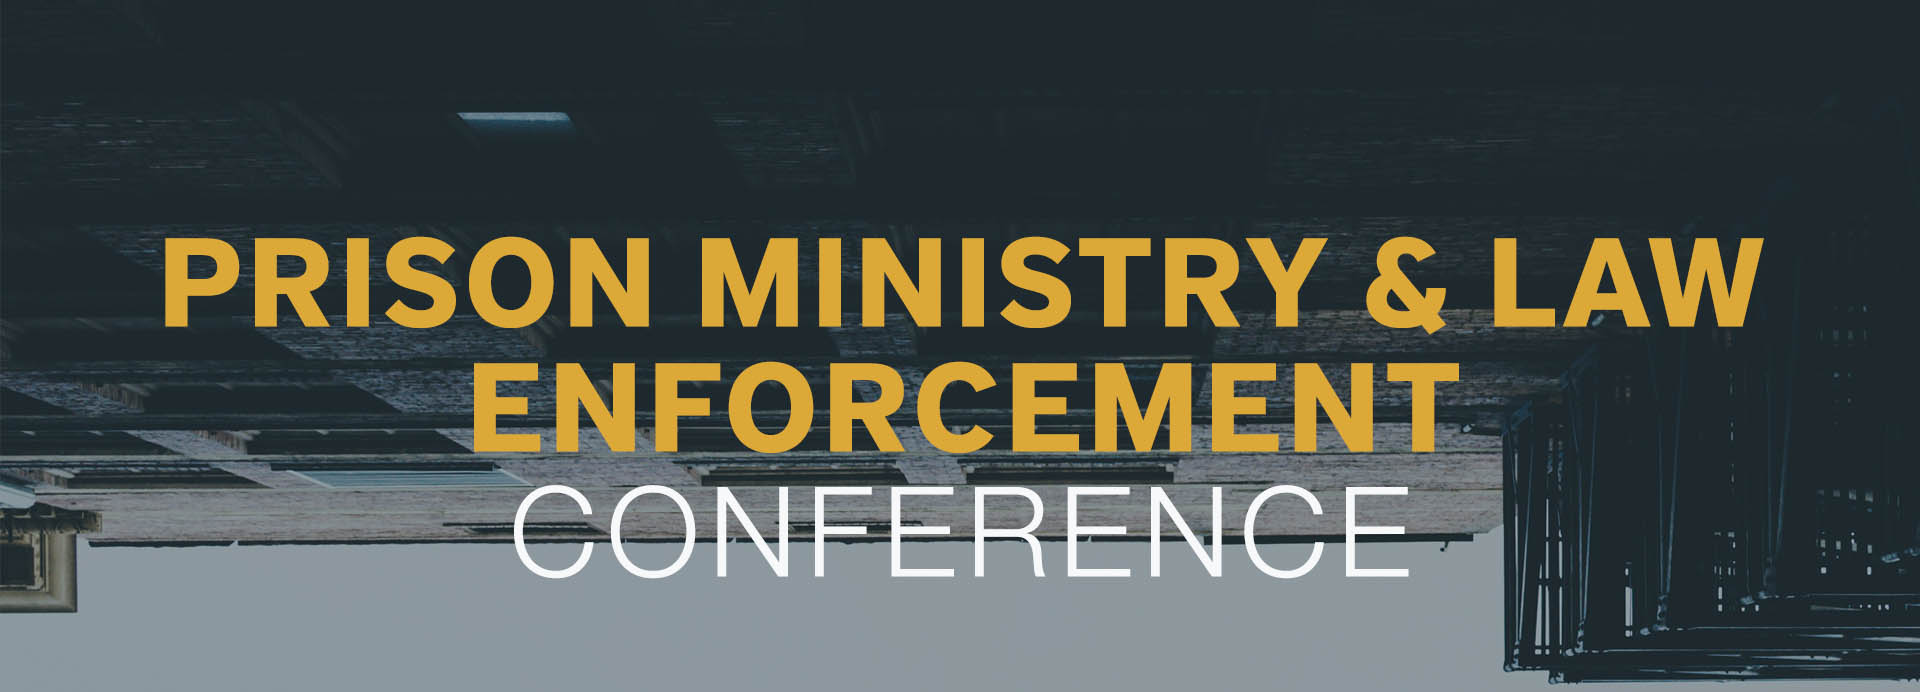 Prison Ministry & Law Enforcement Conference